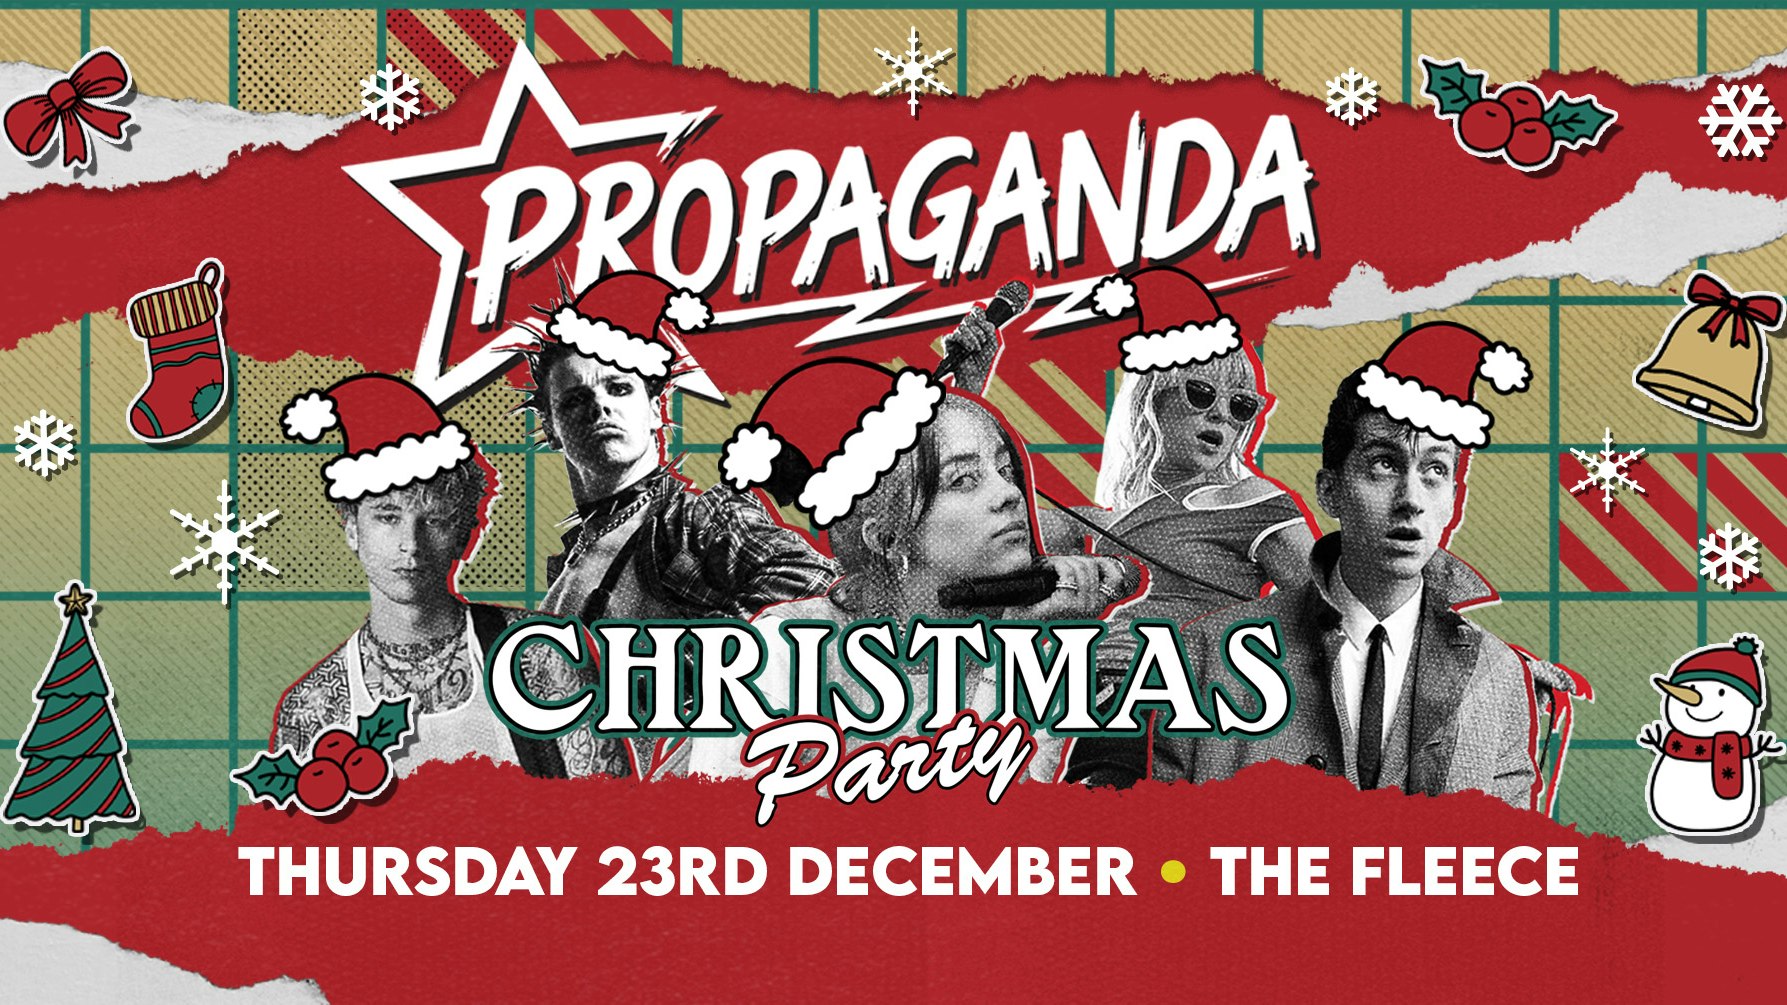 Propaganda Bristol – Christmas Party!